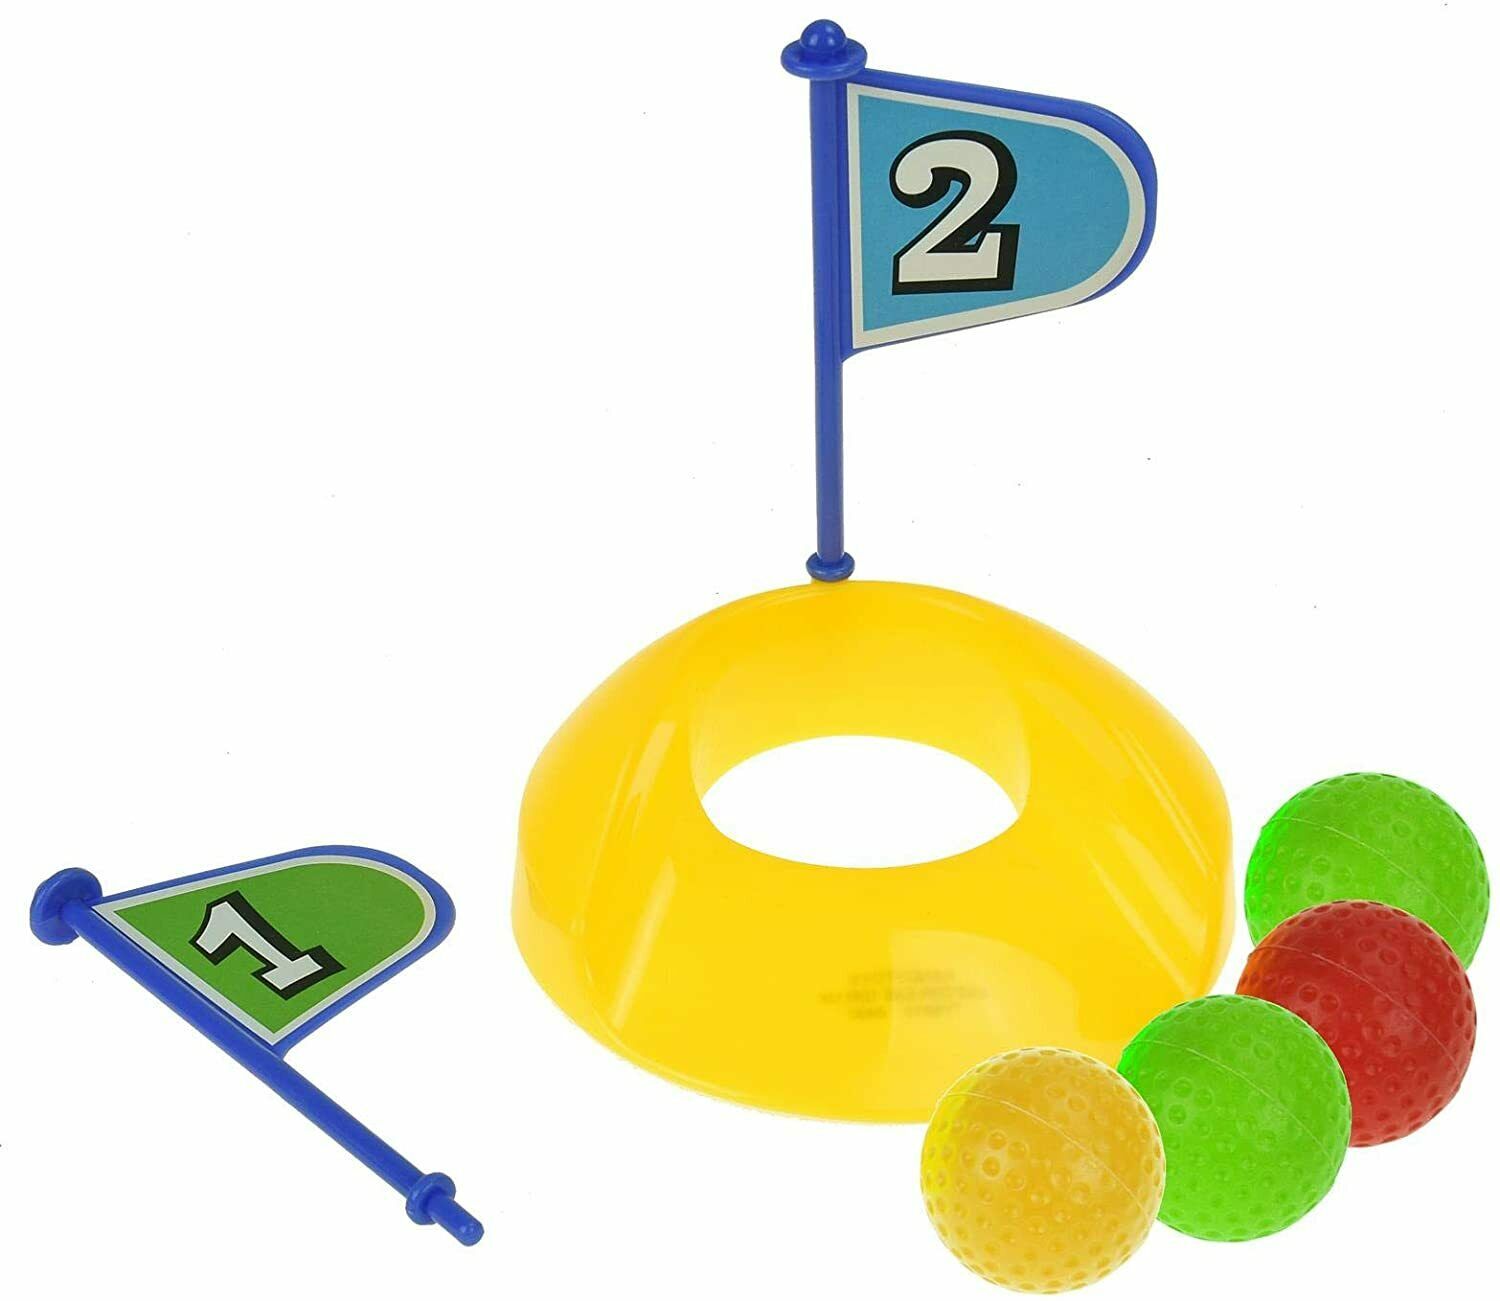 Children's Junior Golf Playset The Magic Toy Shop - The Magic Toy Shop